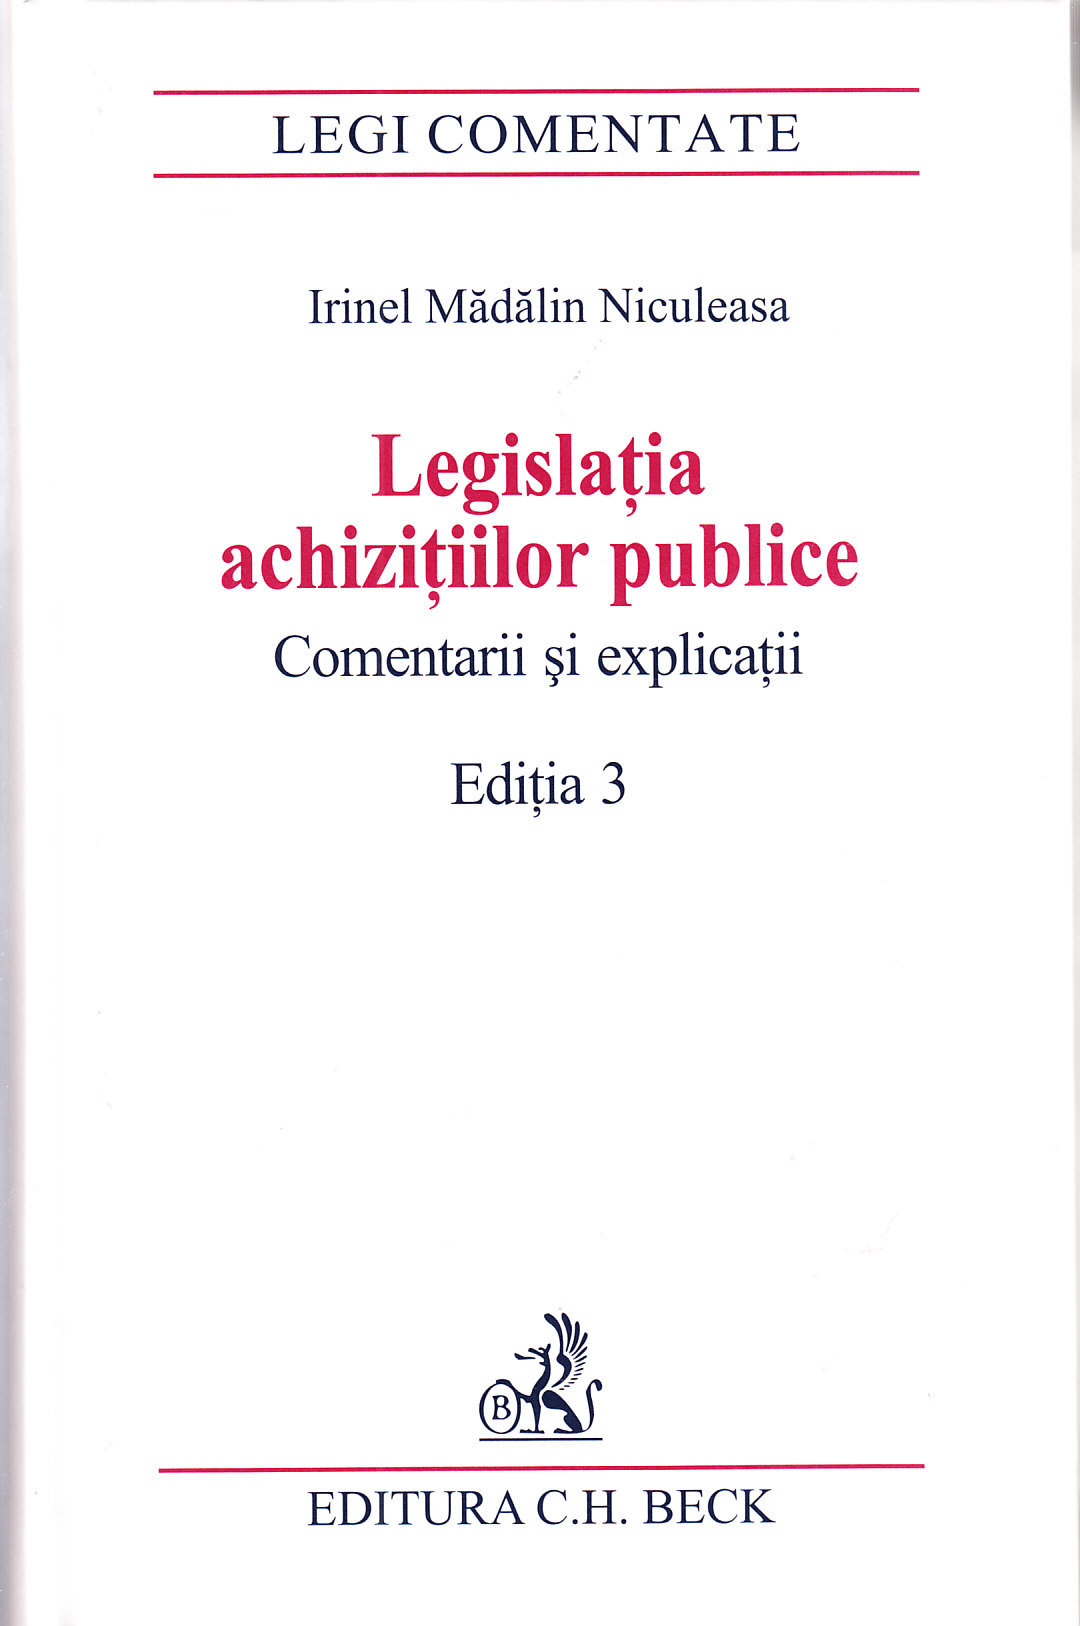 Legislatia achizitiilor publice ed.3 Comentarii si explicatii - Irinel Madalin Niculeasa